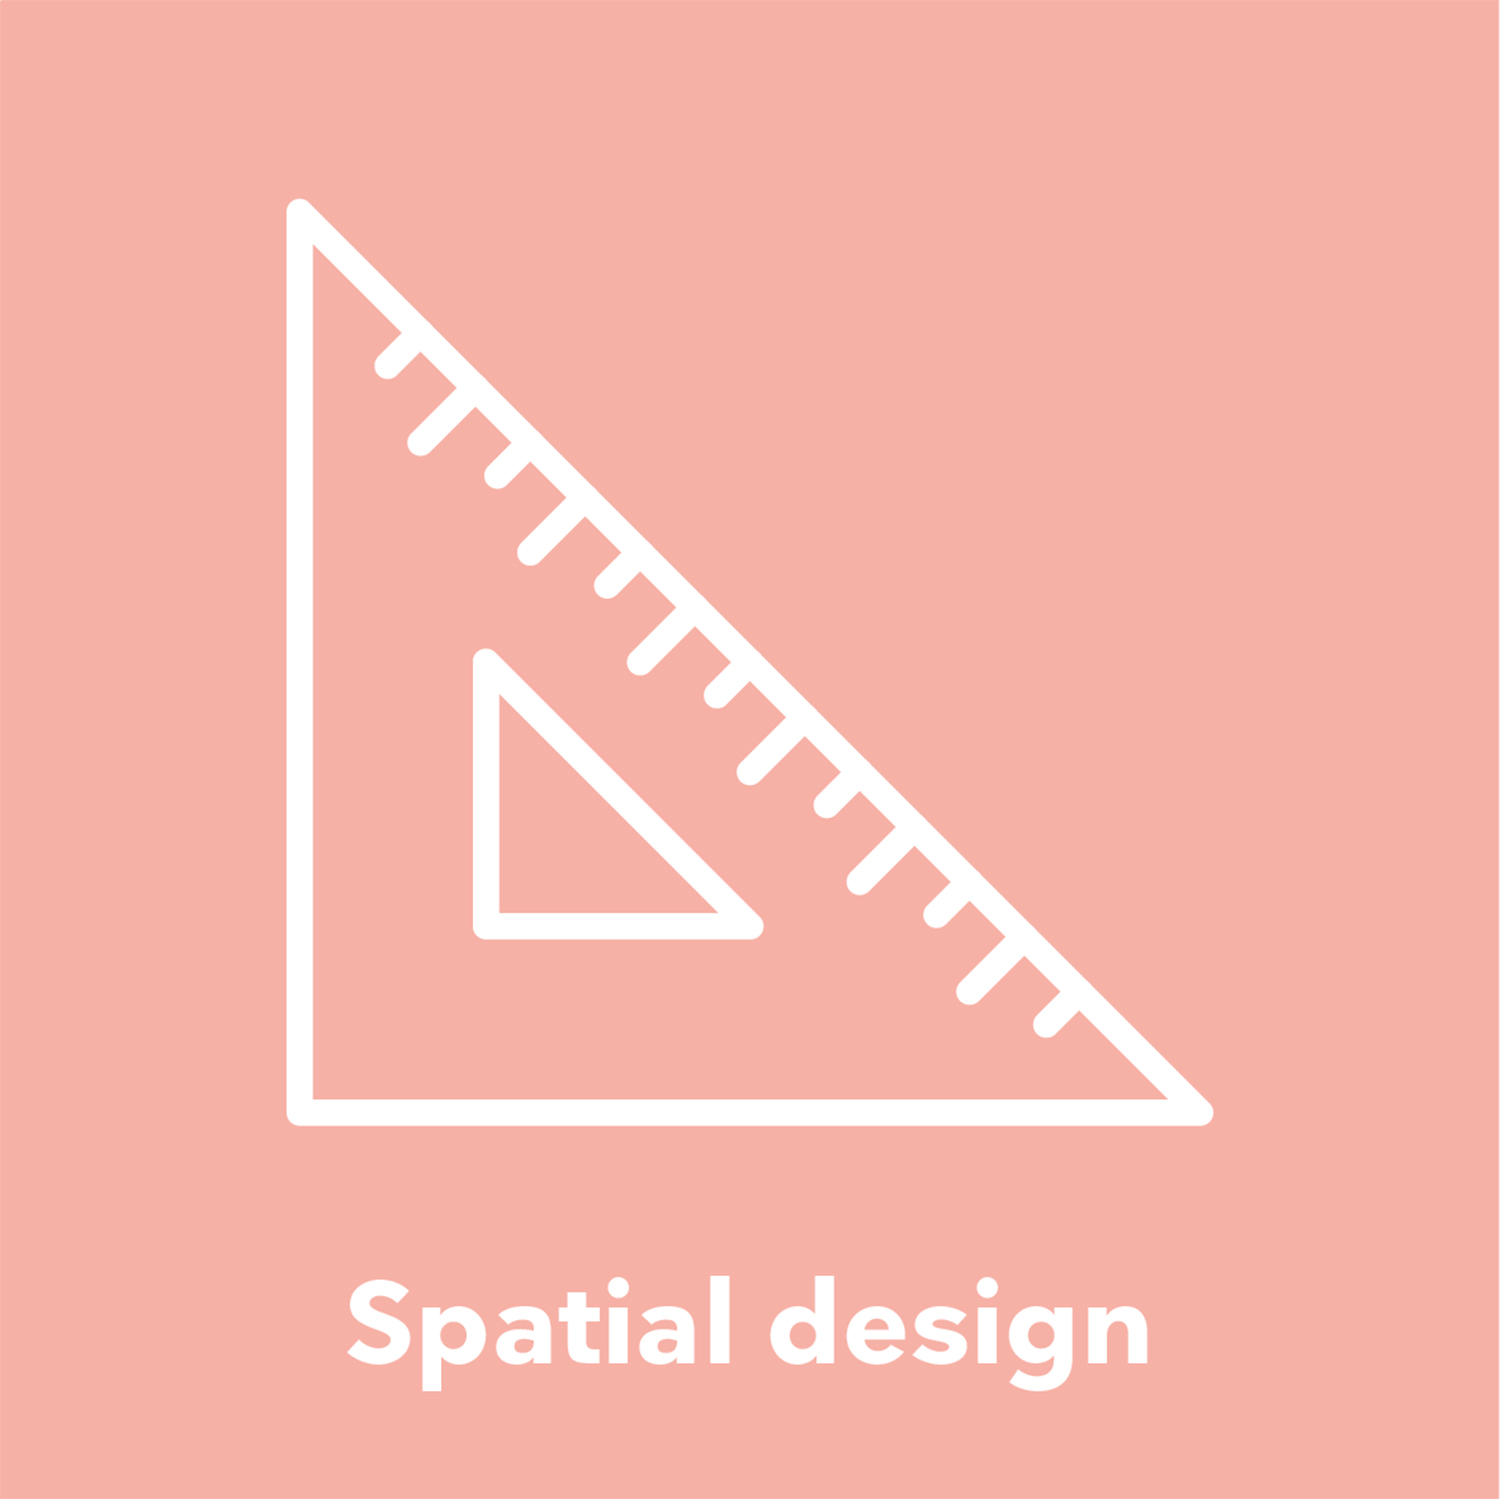 spatial design